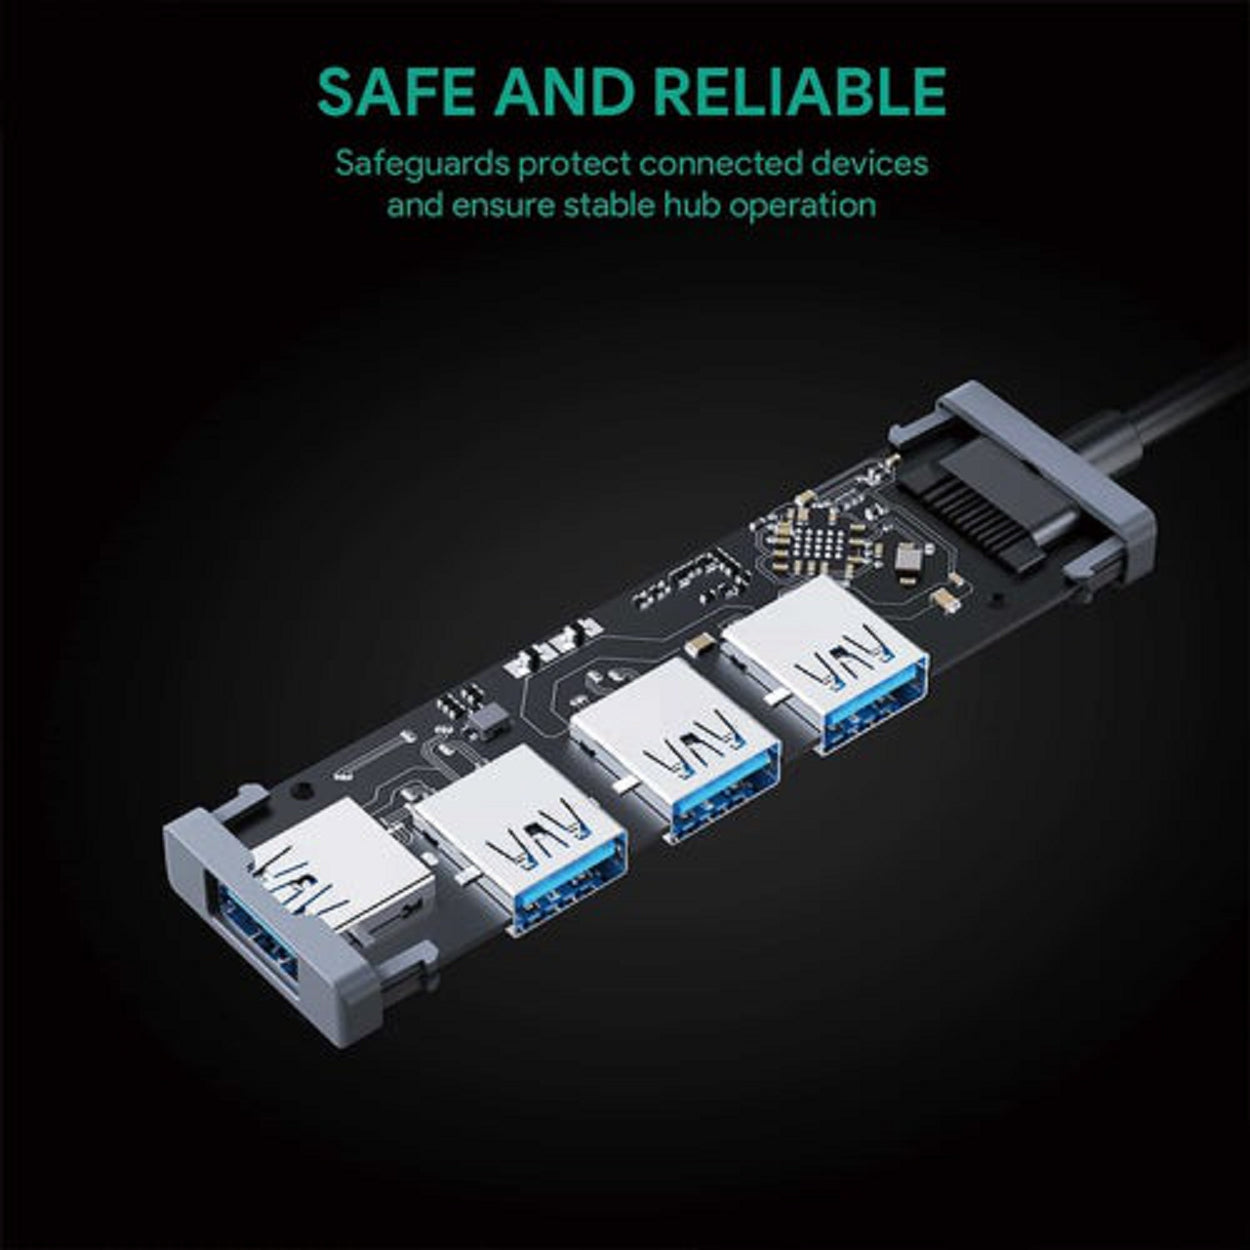 AUKEY 4-in-1 USB-3.0 Hub / Ultraflach / Aluminium / CB-H36